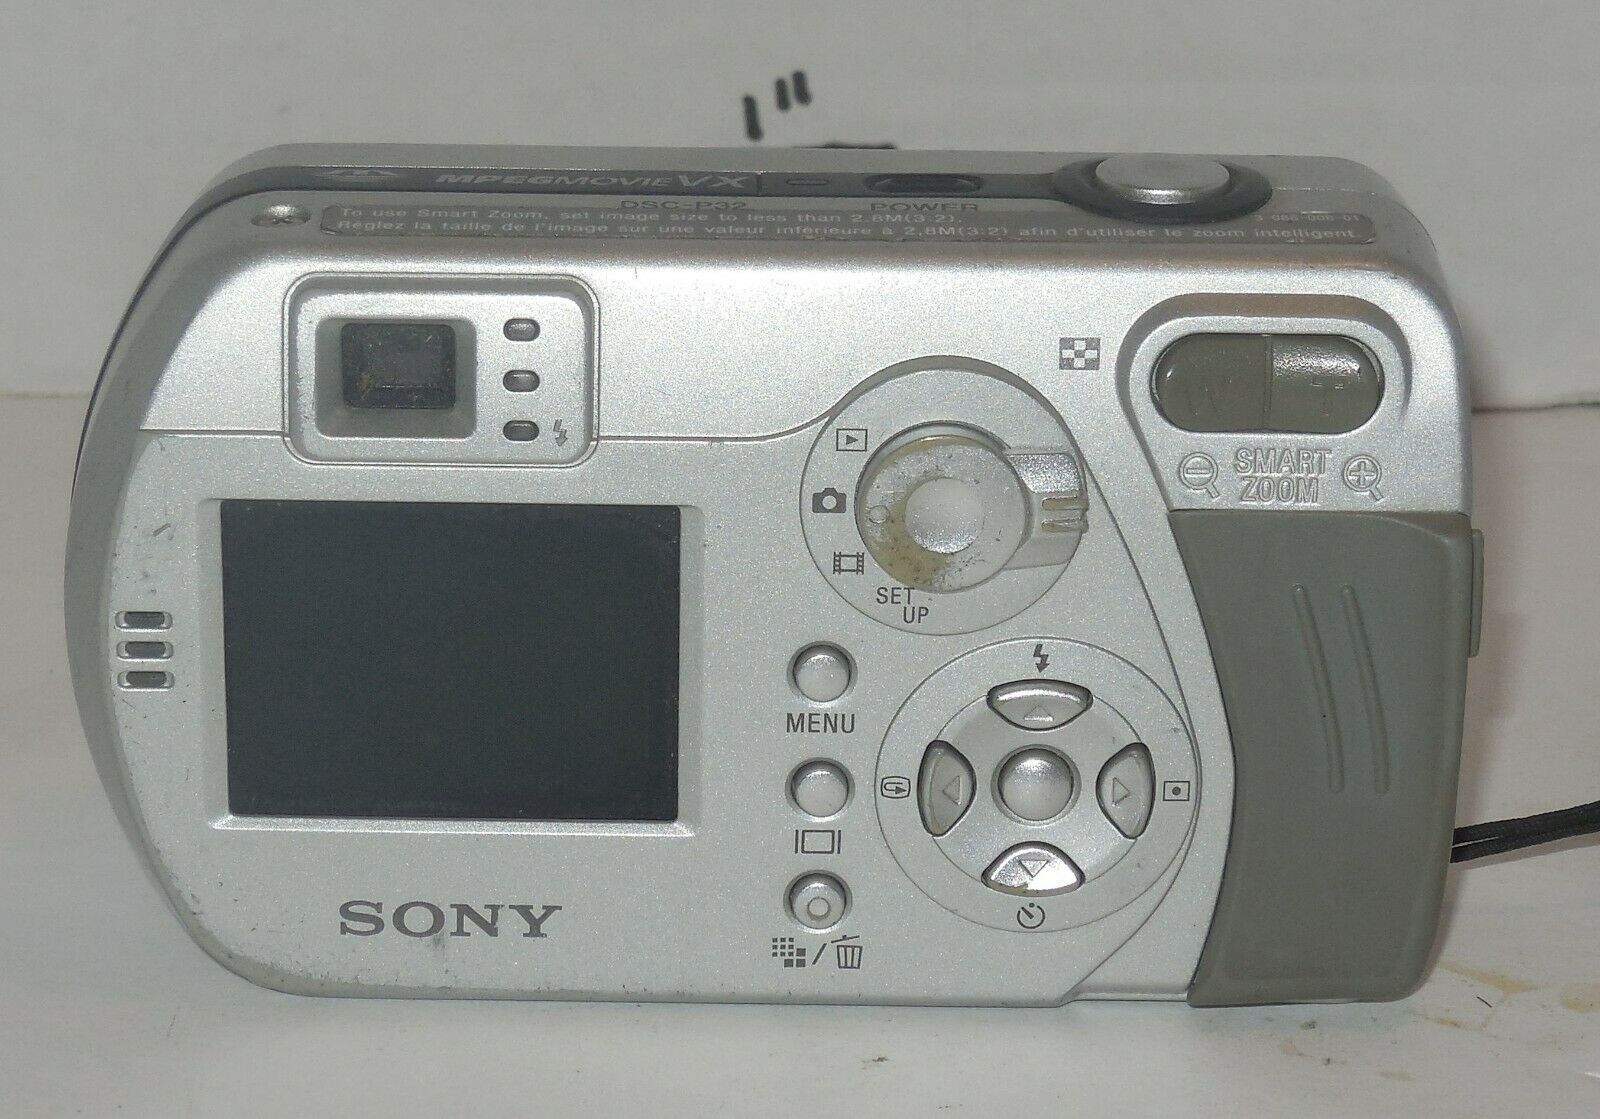 Sony Cyber-shot DSC-P32 3.2MP Digital Camera - Silver - Digital Cameras